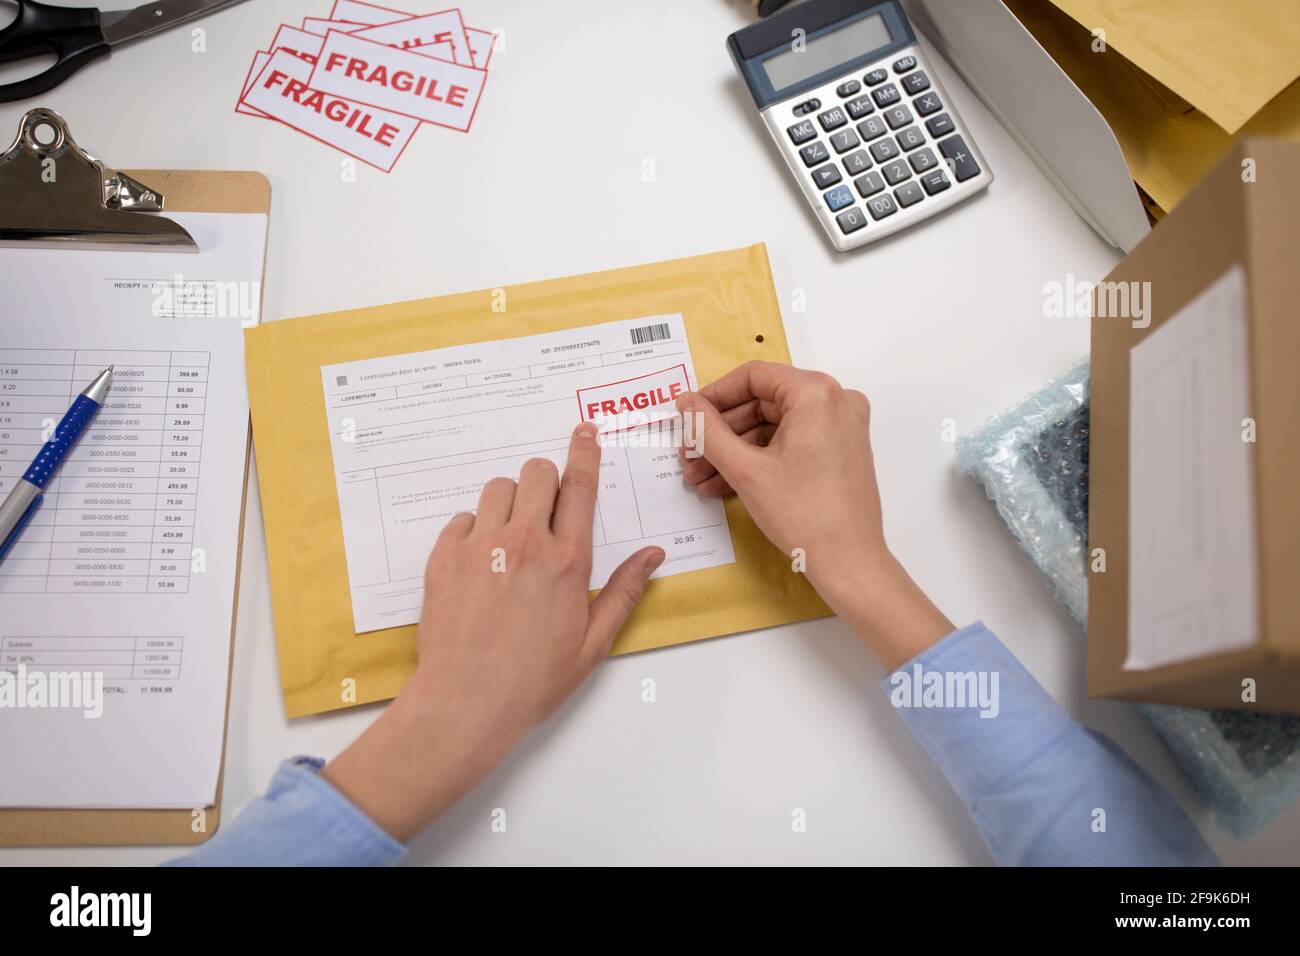 hands sticking fragile marks to parcel in envelope Stock Photo